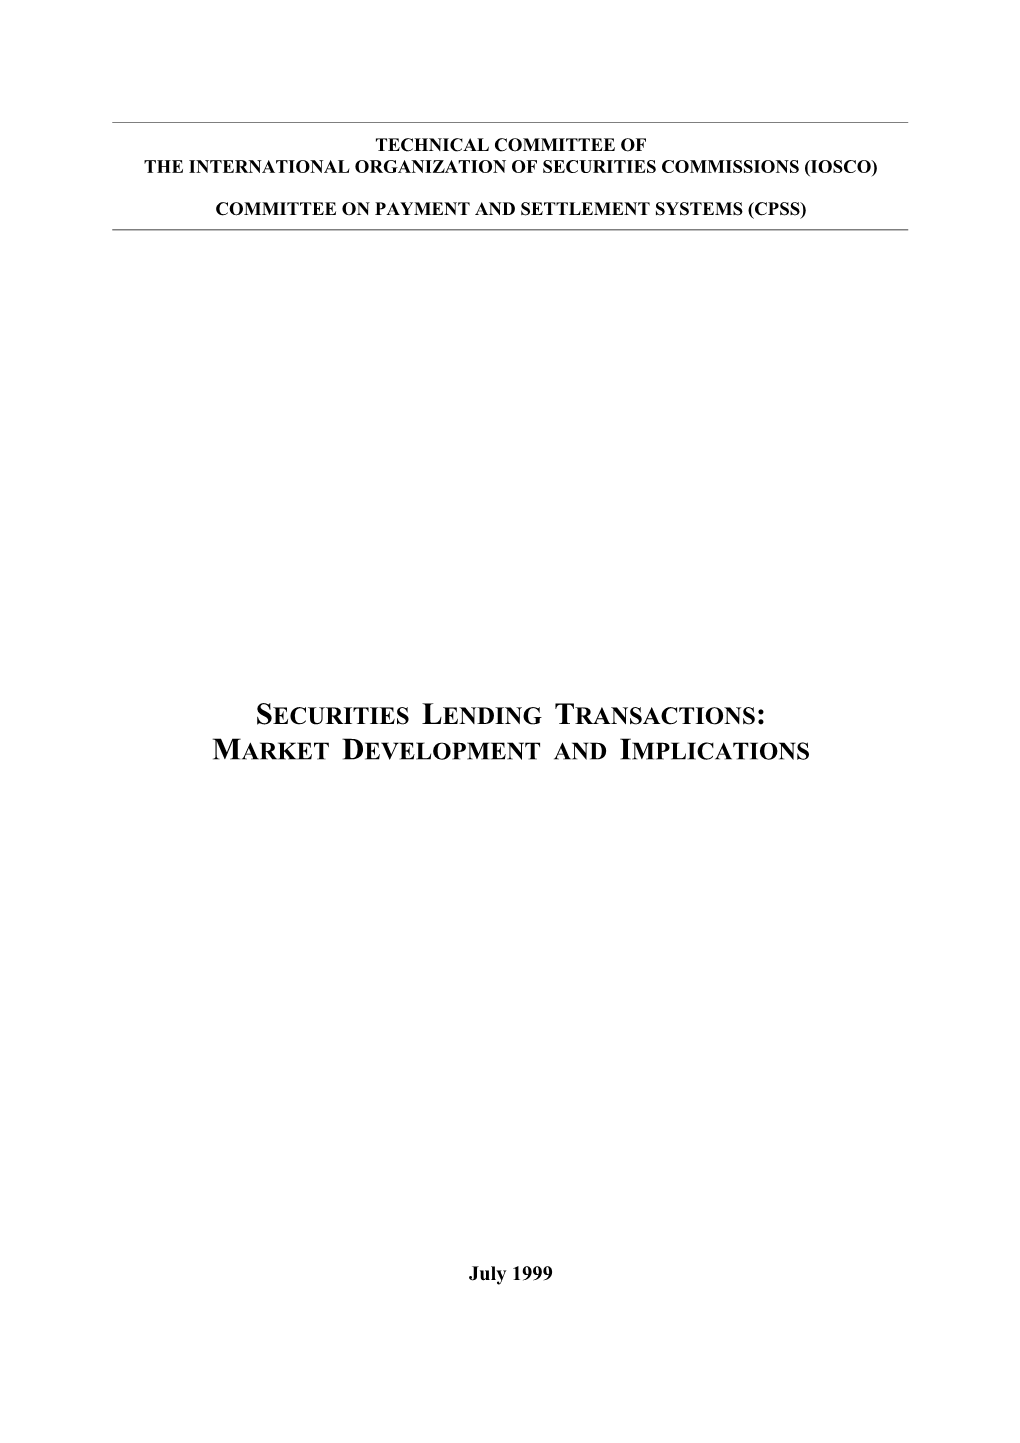 Securities Lending Transactions: Market Development and Implications